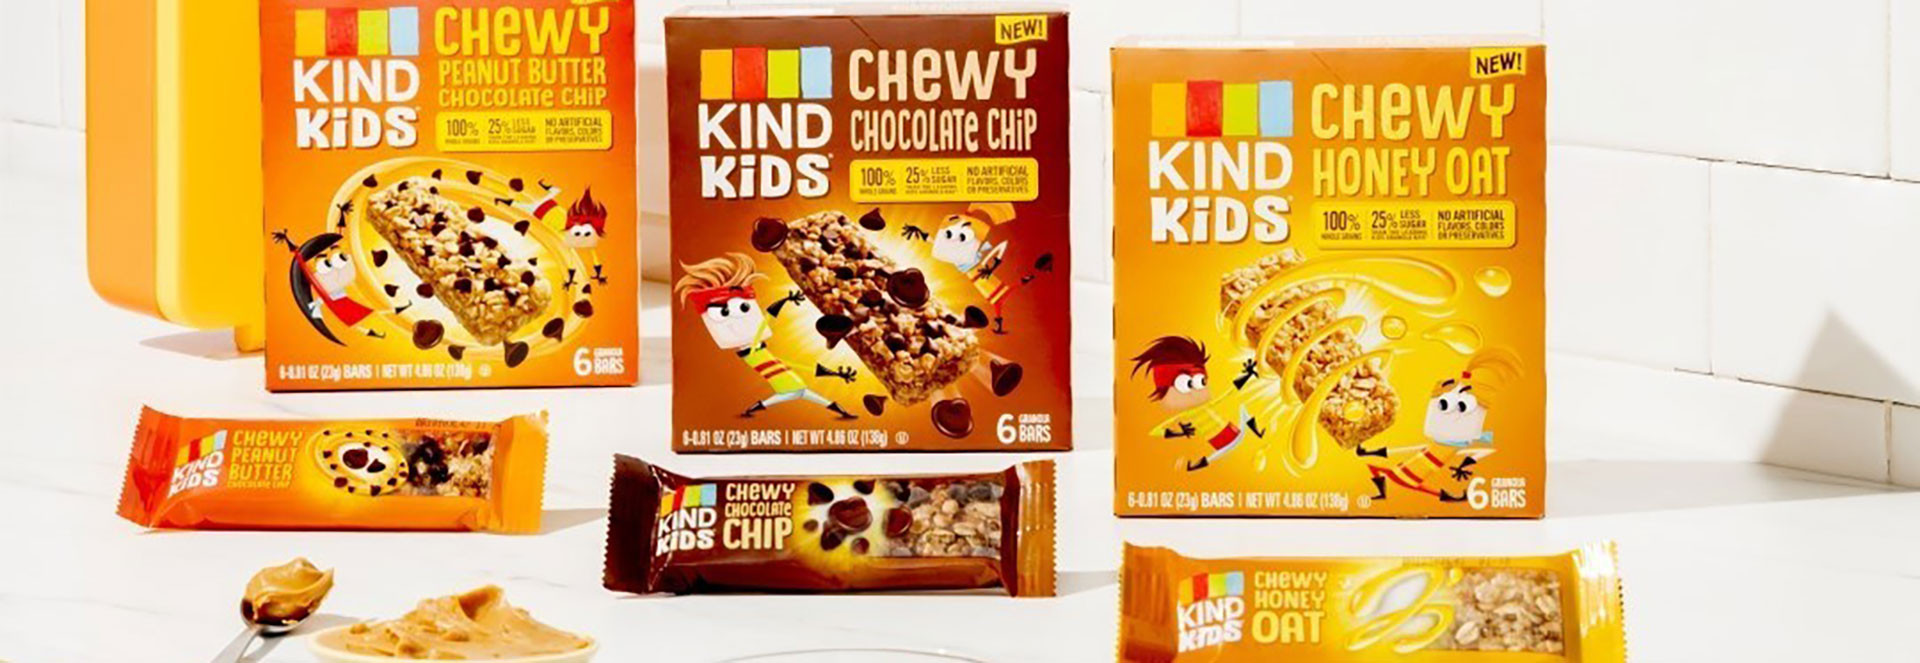 Kind Healthy Snacks
 Kind Debuts Healthy Children’s Snack